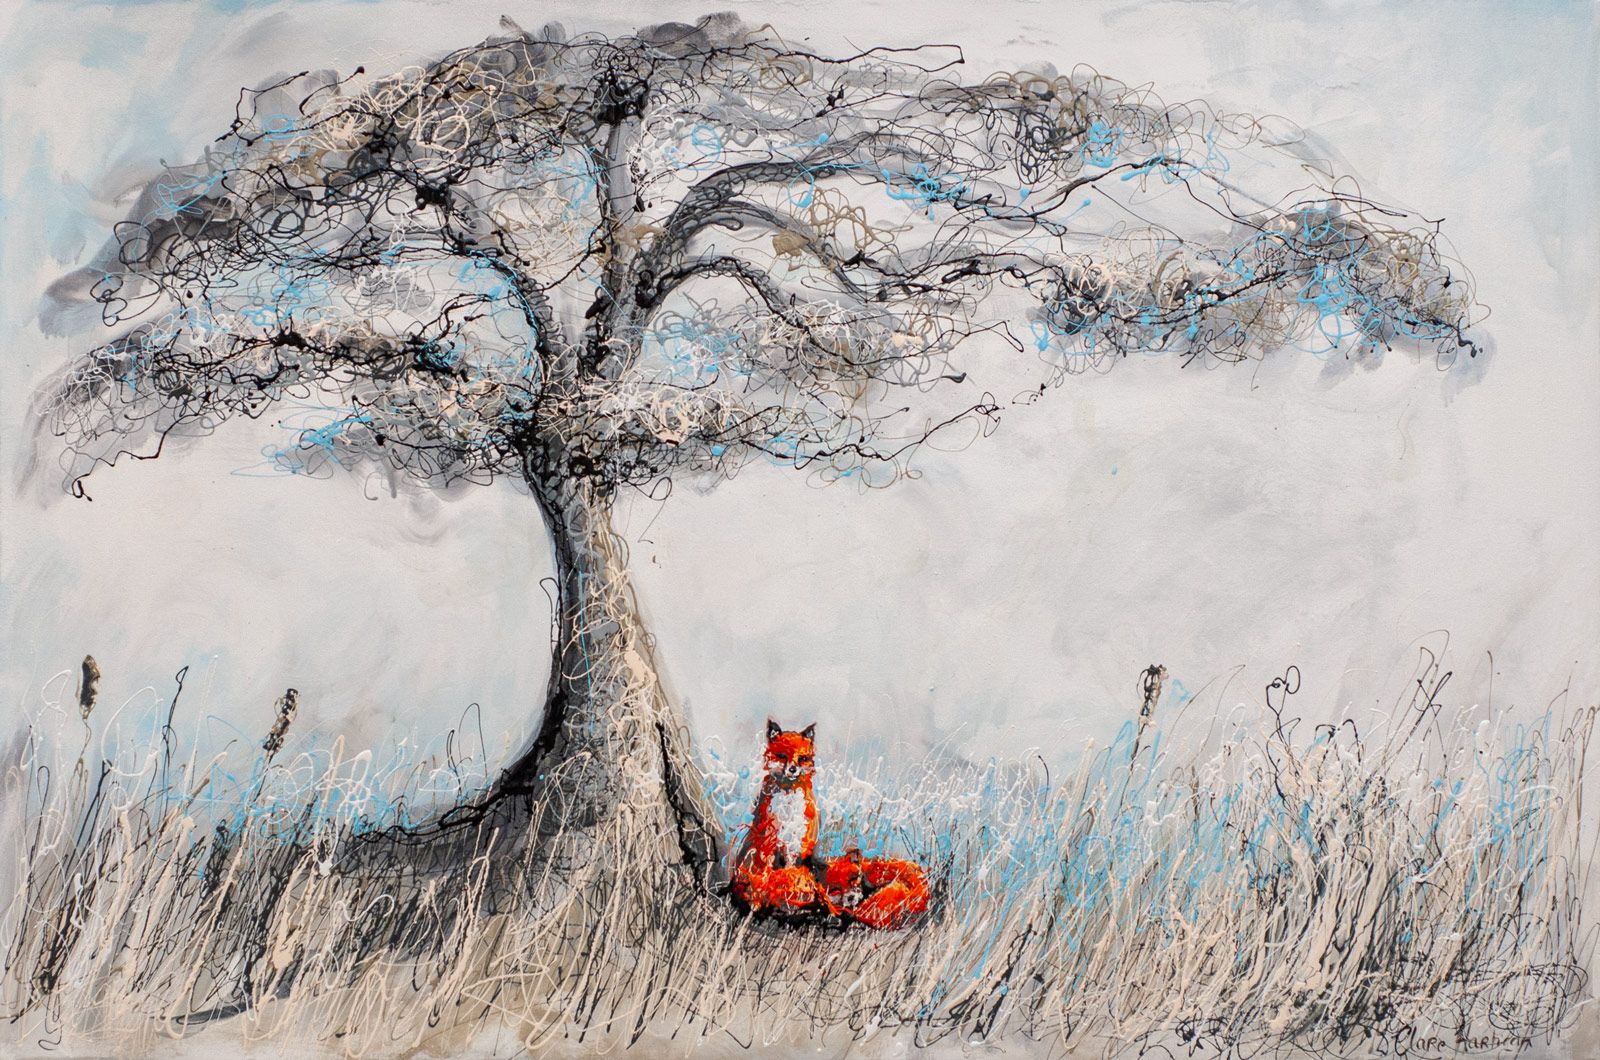 Sleep Little Fox by Clare Hartigan